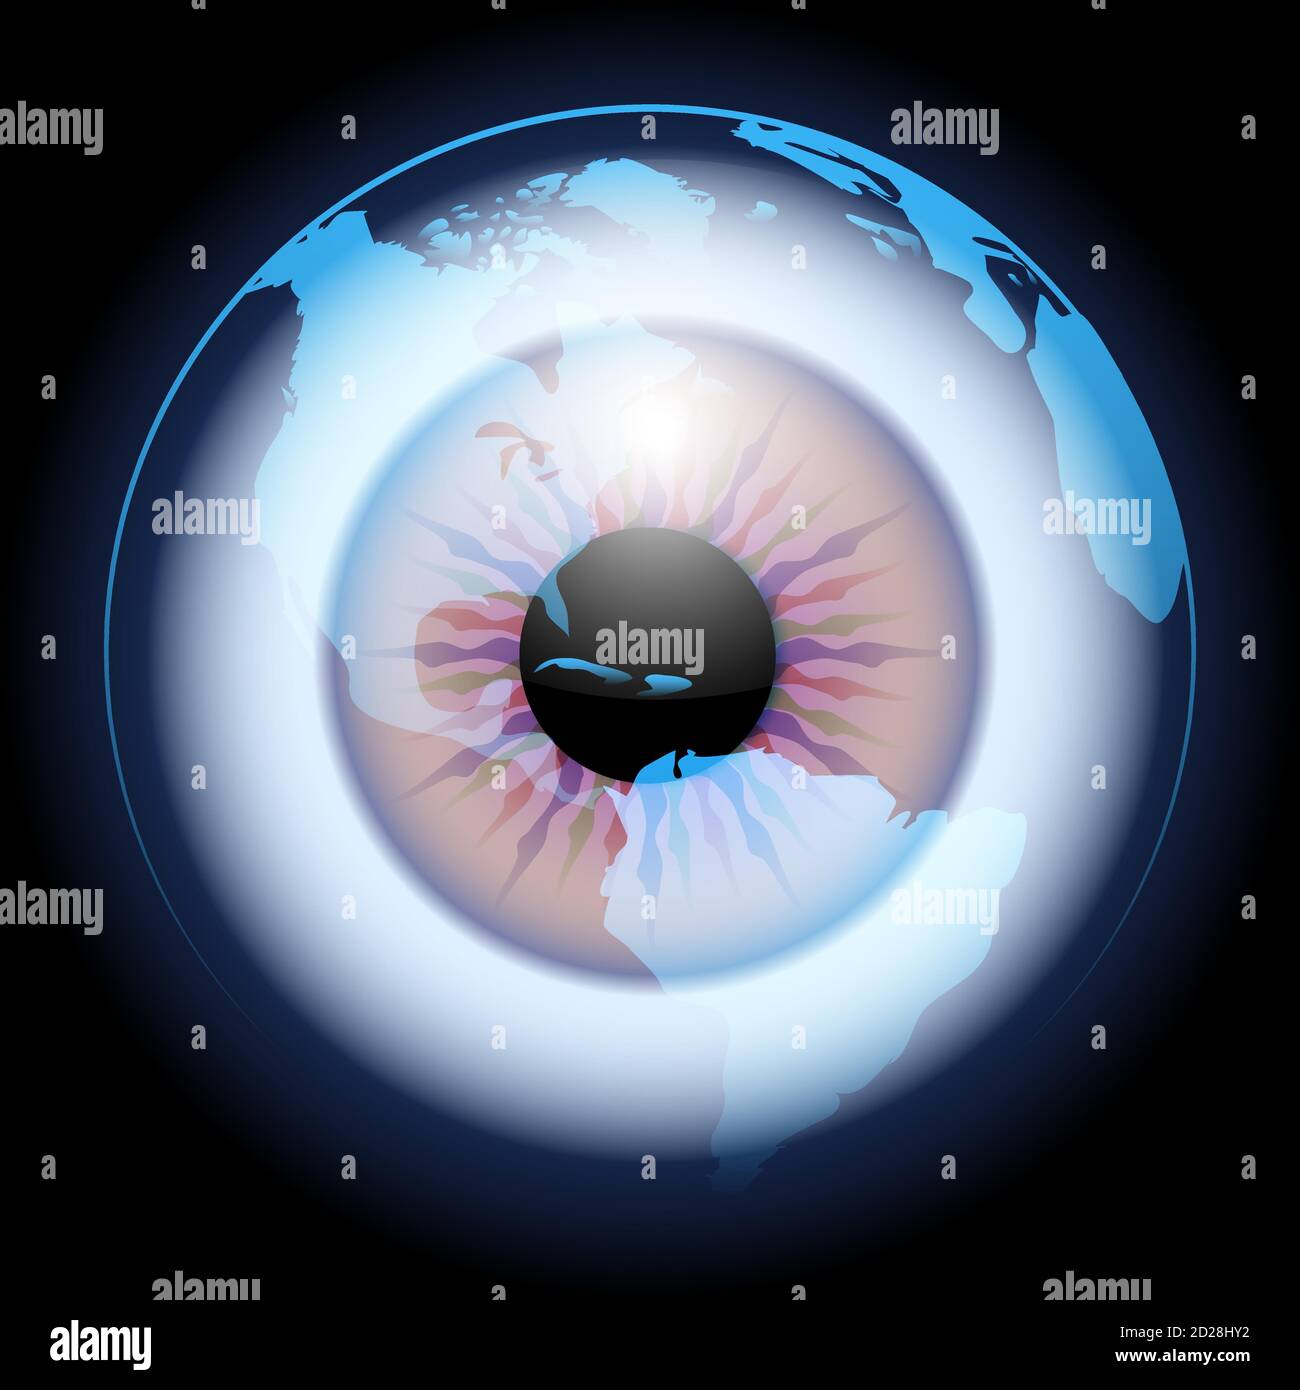 Globe With Eye Ball Inside. Global vision concept. Vector illustration. Stock Vector